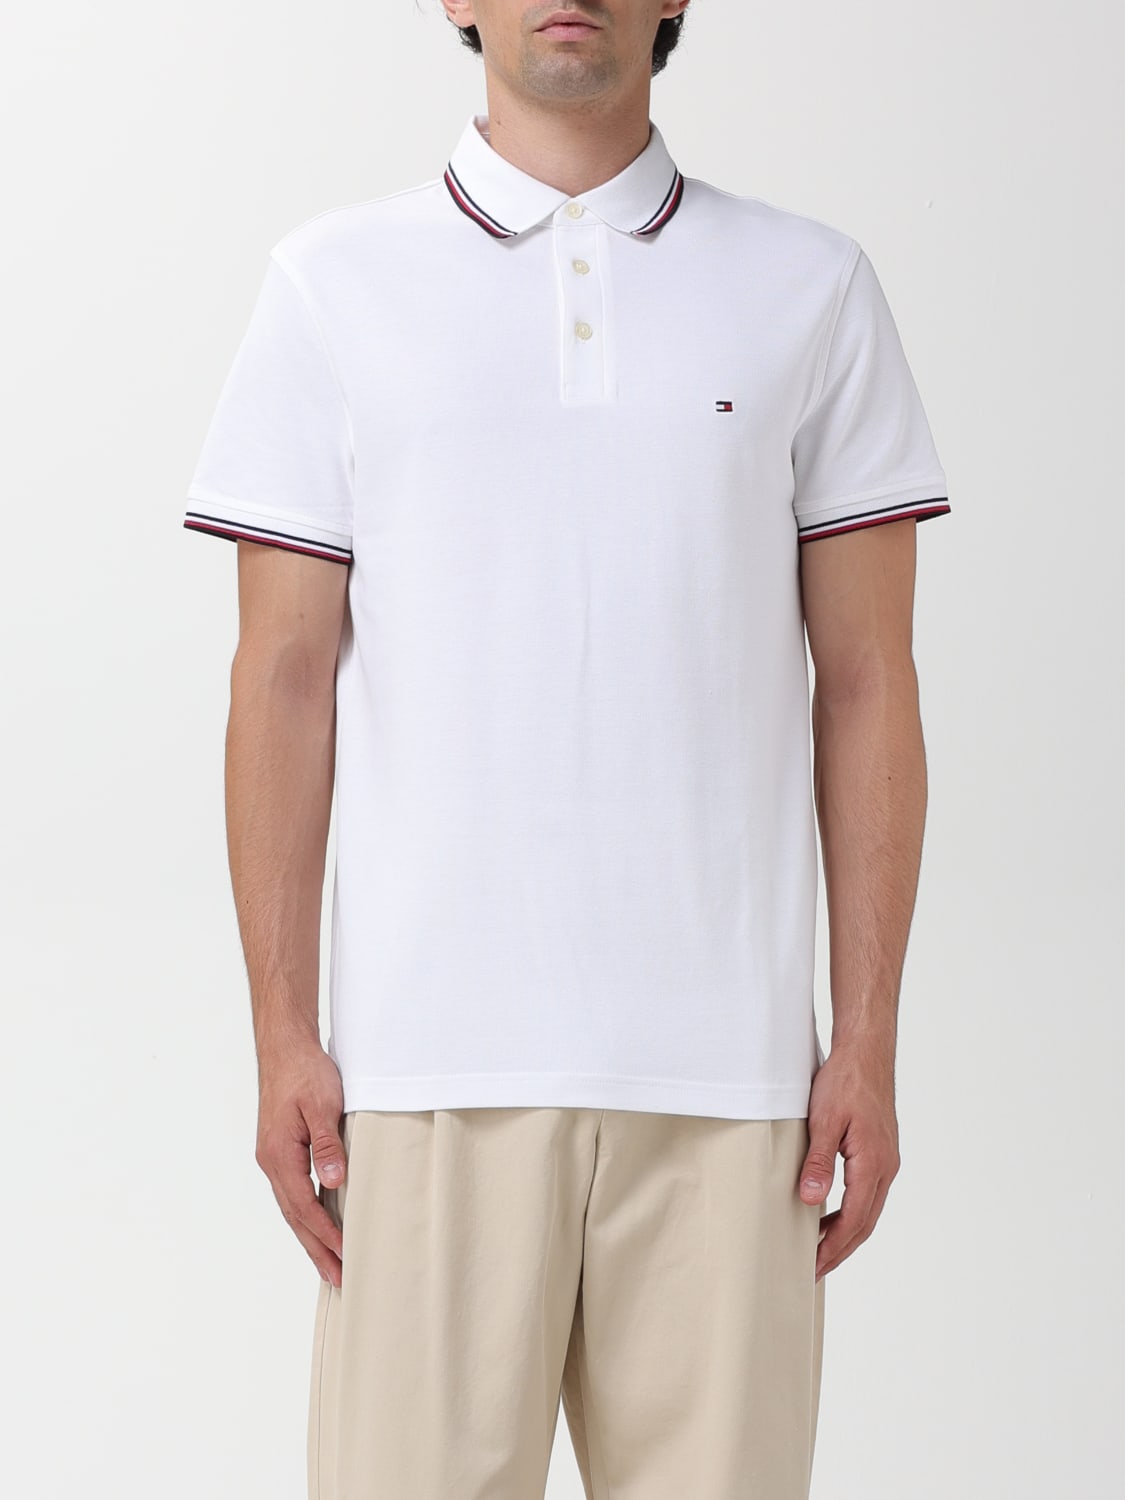 Buy Men's White Tommy Hilfiger Shirts Online